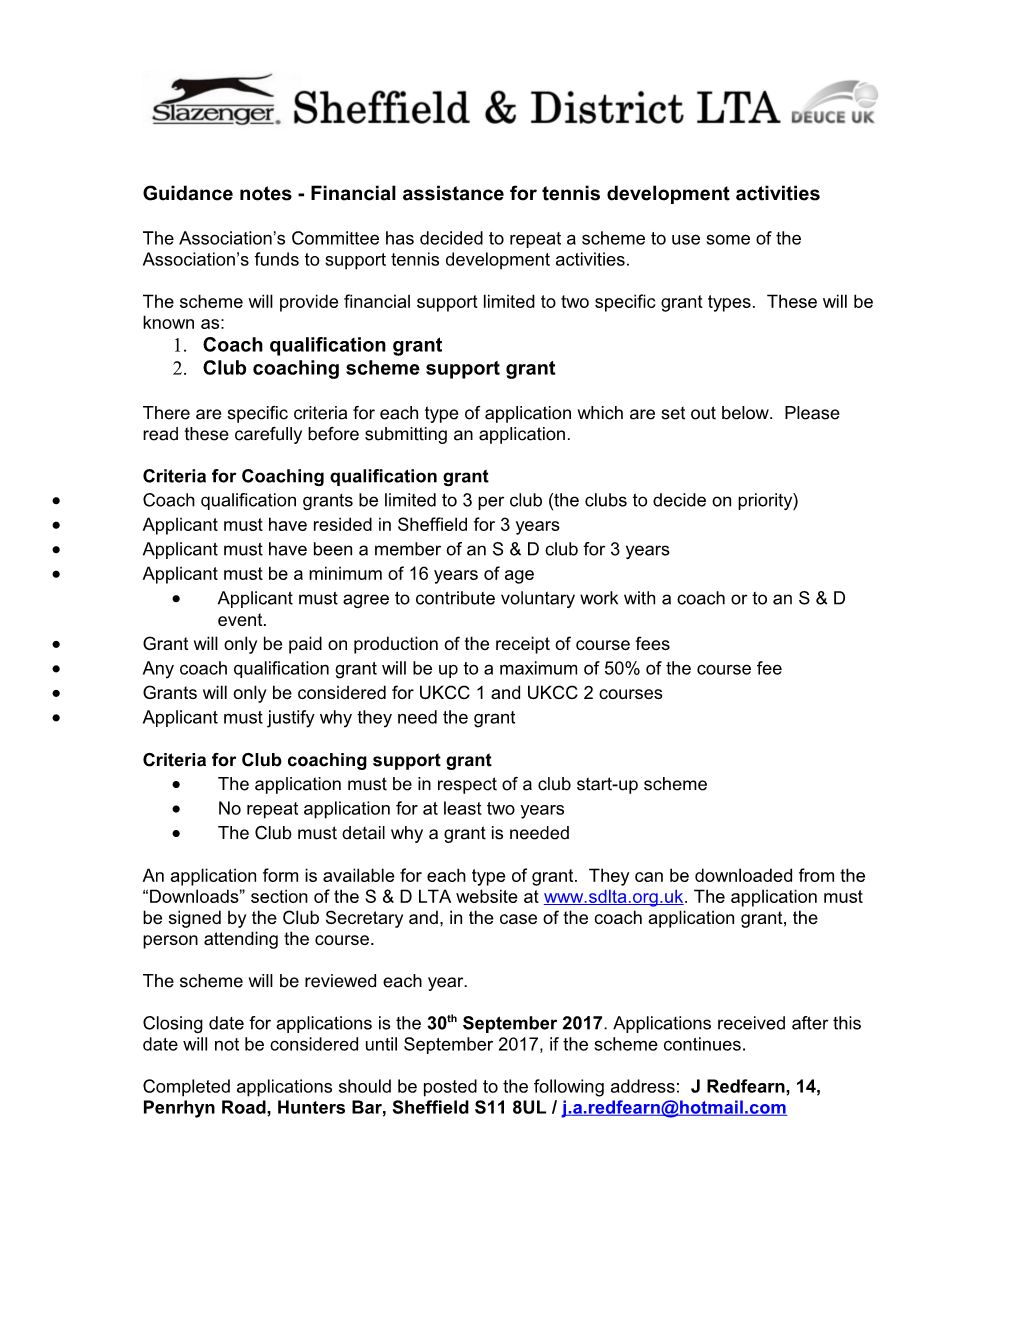 Guidance Notes - Financial Assistance for Tennis Development Activities